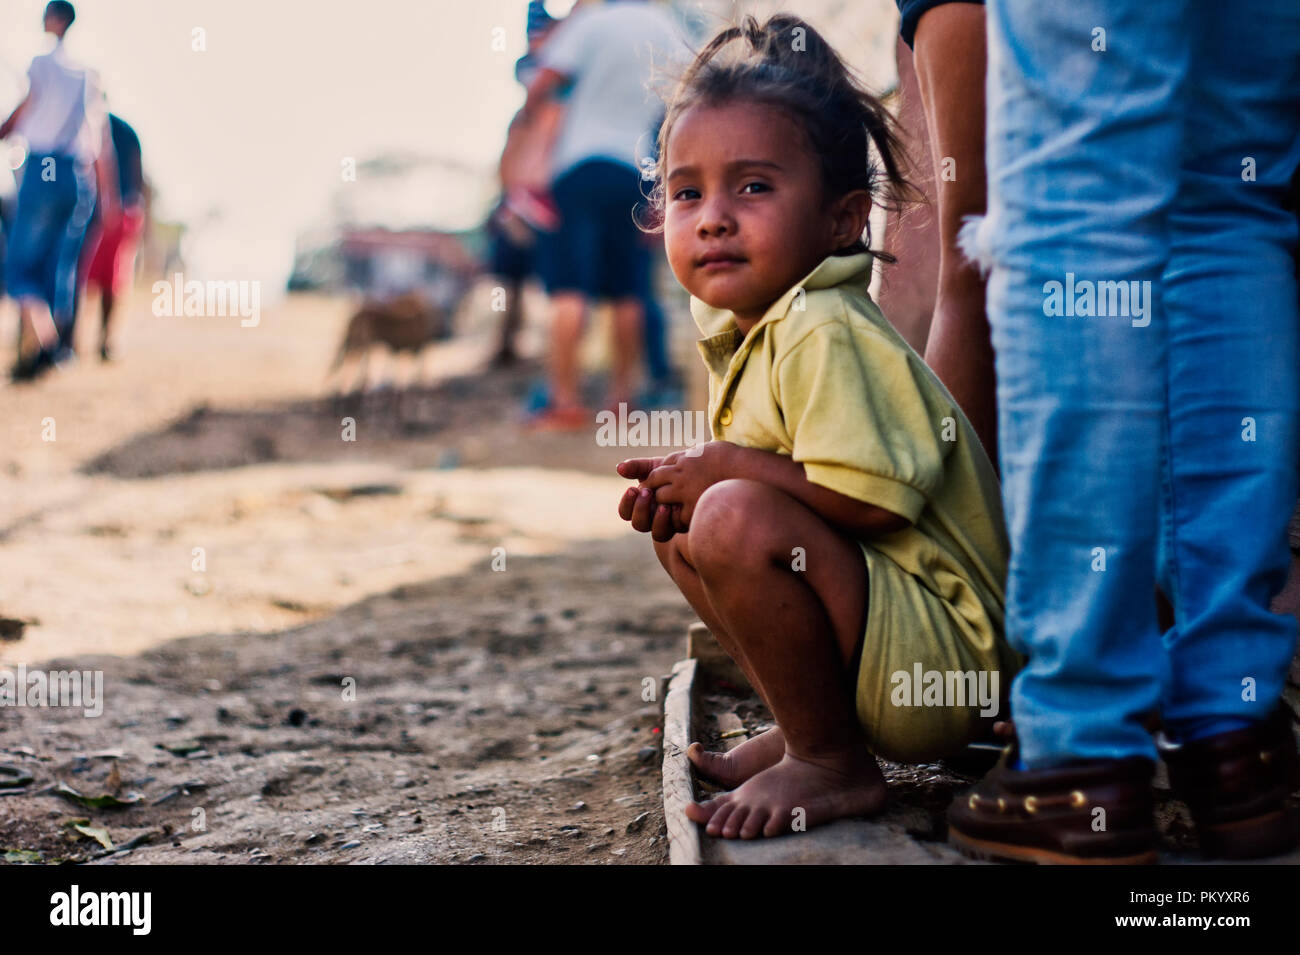 BARCELONA, VENEZUELA June 2, 2018: girl in the poor community 'ciudad de los mochos' sitting barefoot in the street Stock Photo